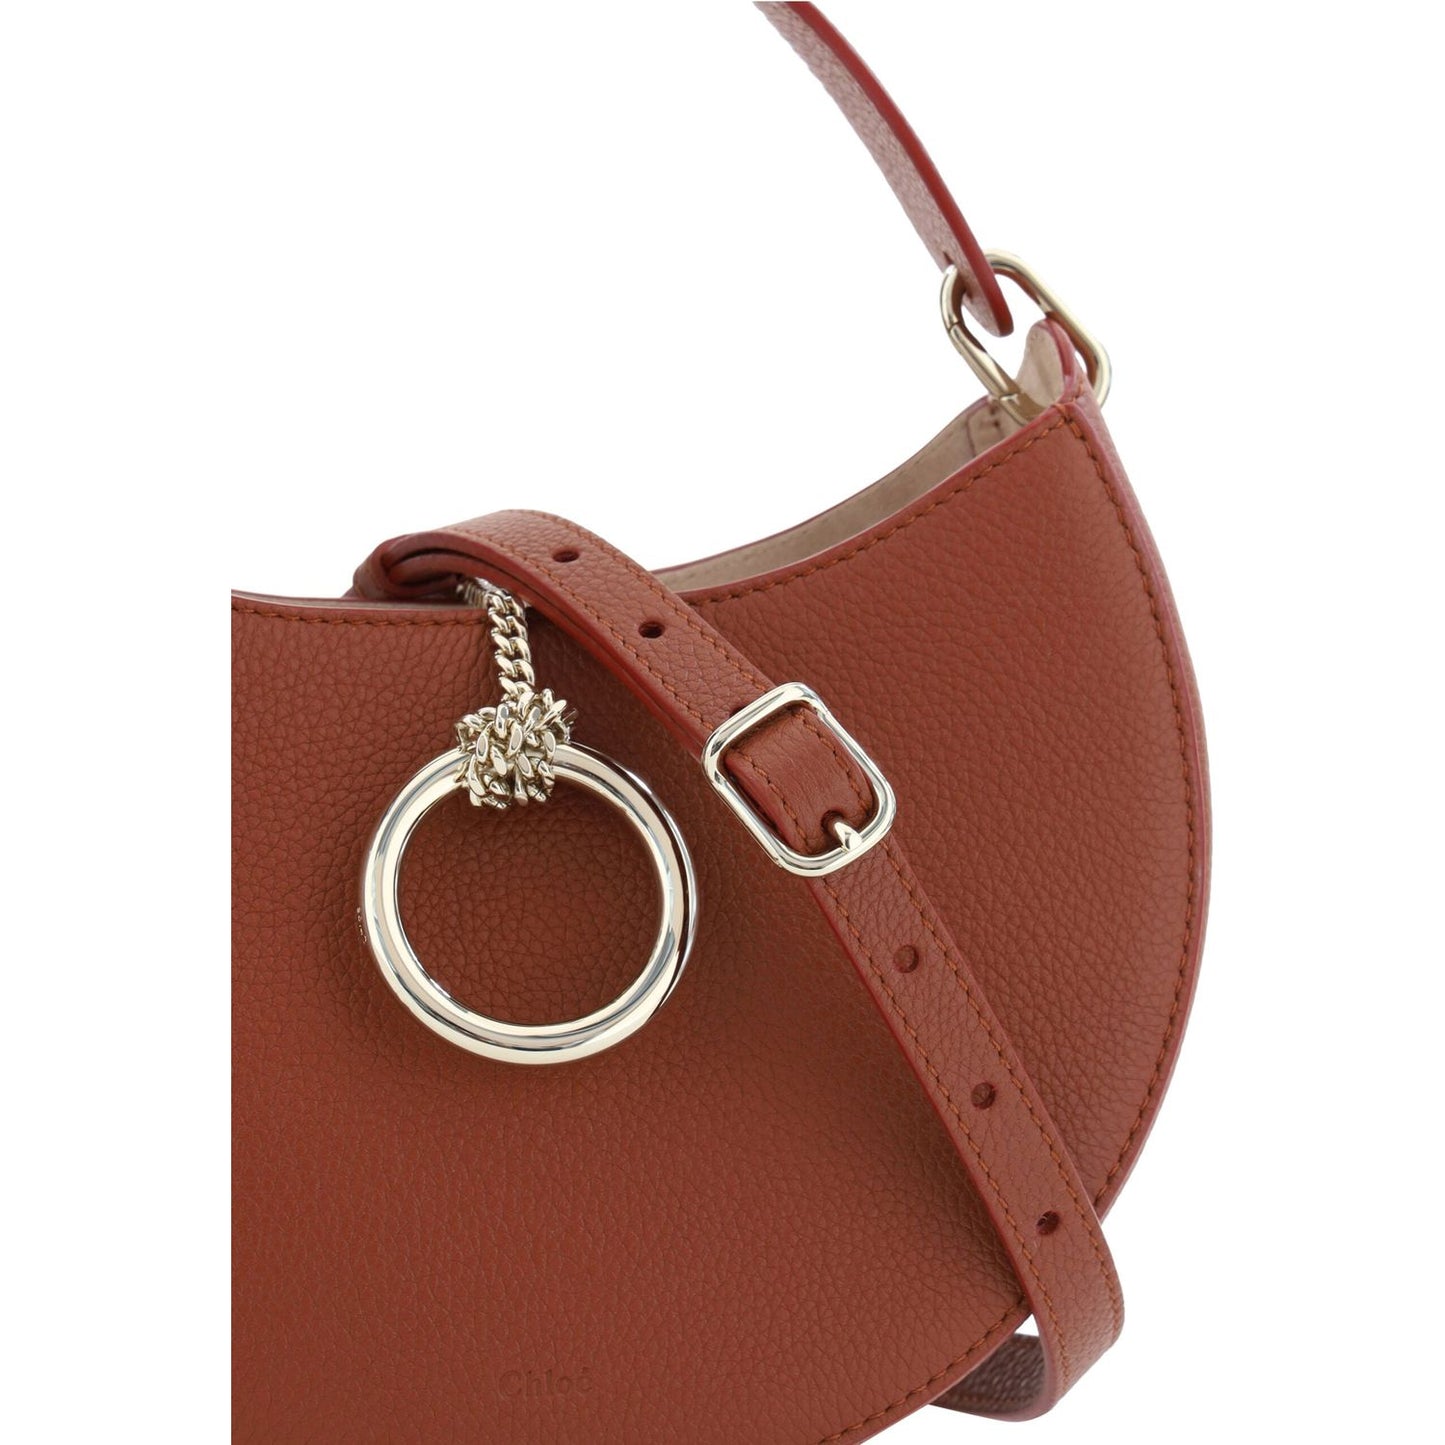 Chloé Sepia Brown Small Arlène Leather Shoulder Bag brown-leather-small-arlene-shoulder-bag 6A885D1F-EE1F-4E6C-A5E5-4CF7E384BD3F-scaled-130ce92d-9ac.jpg